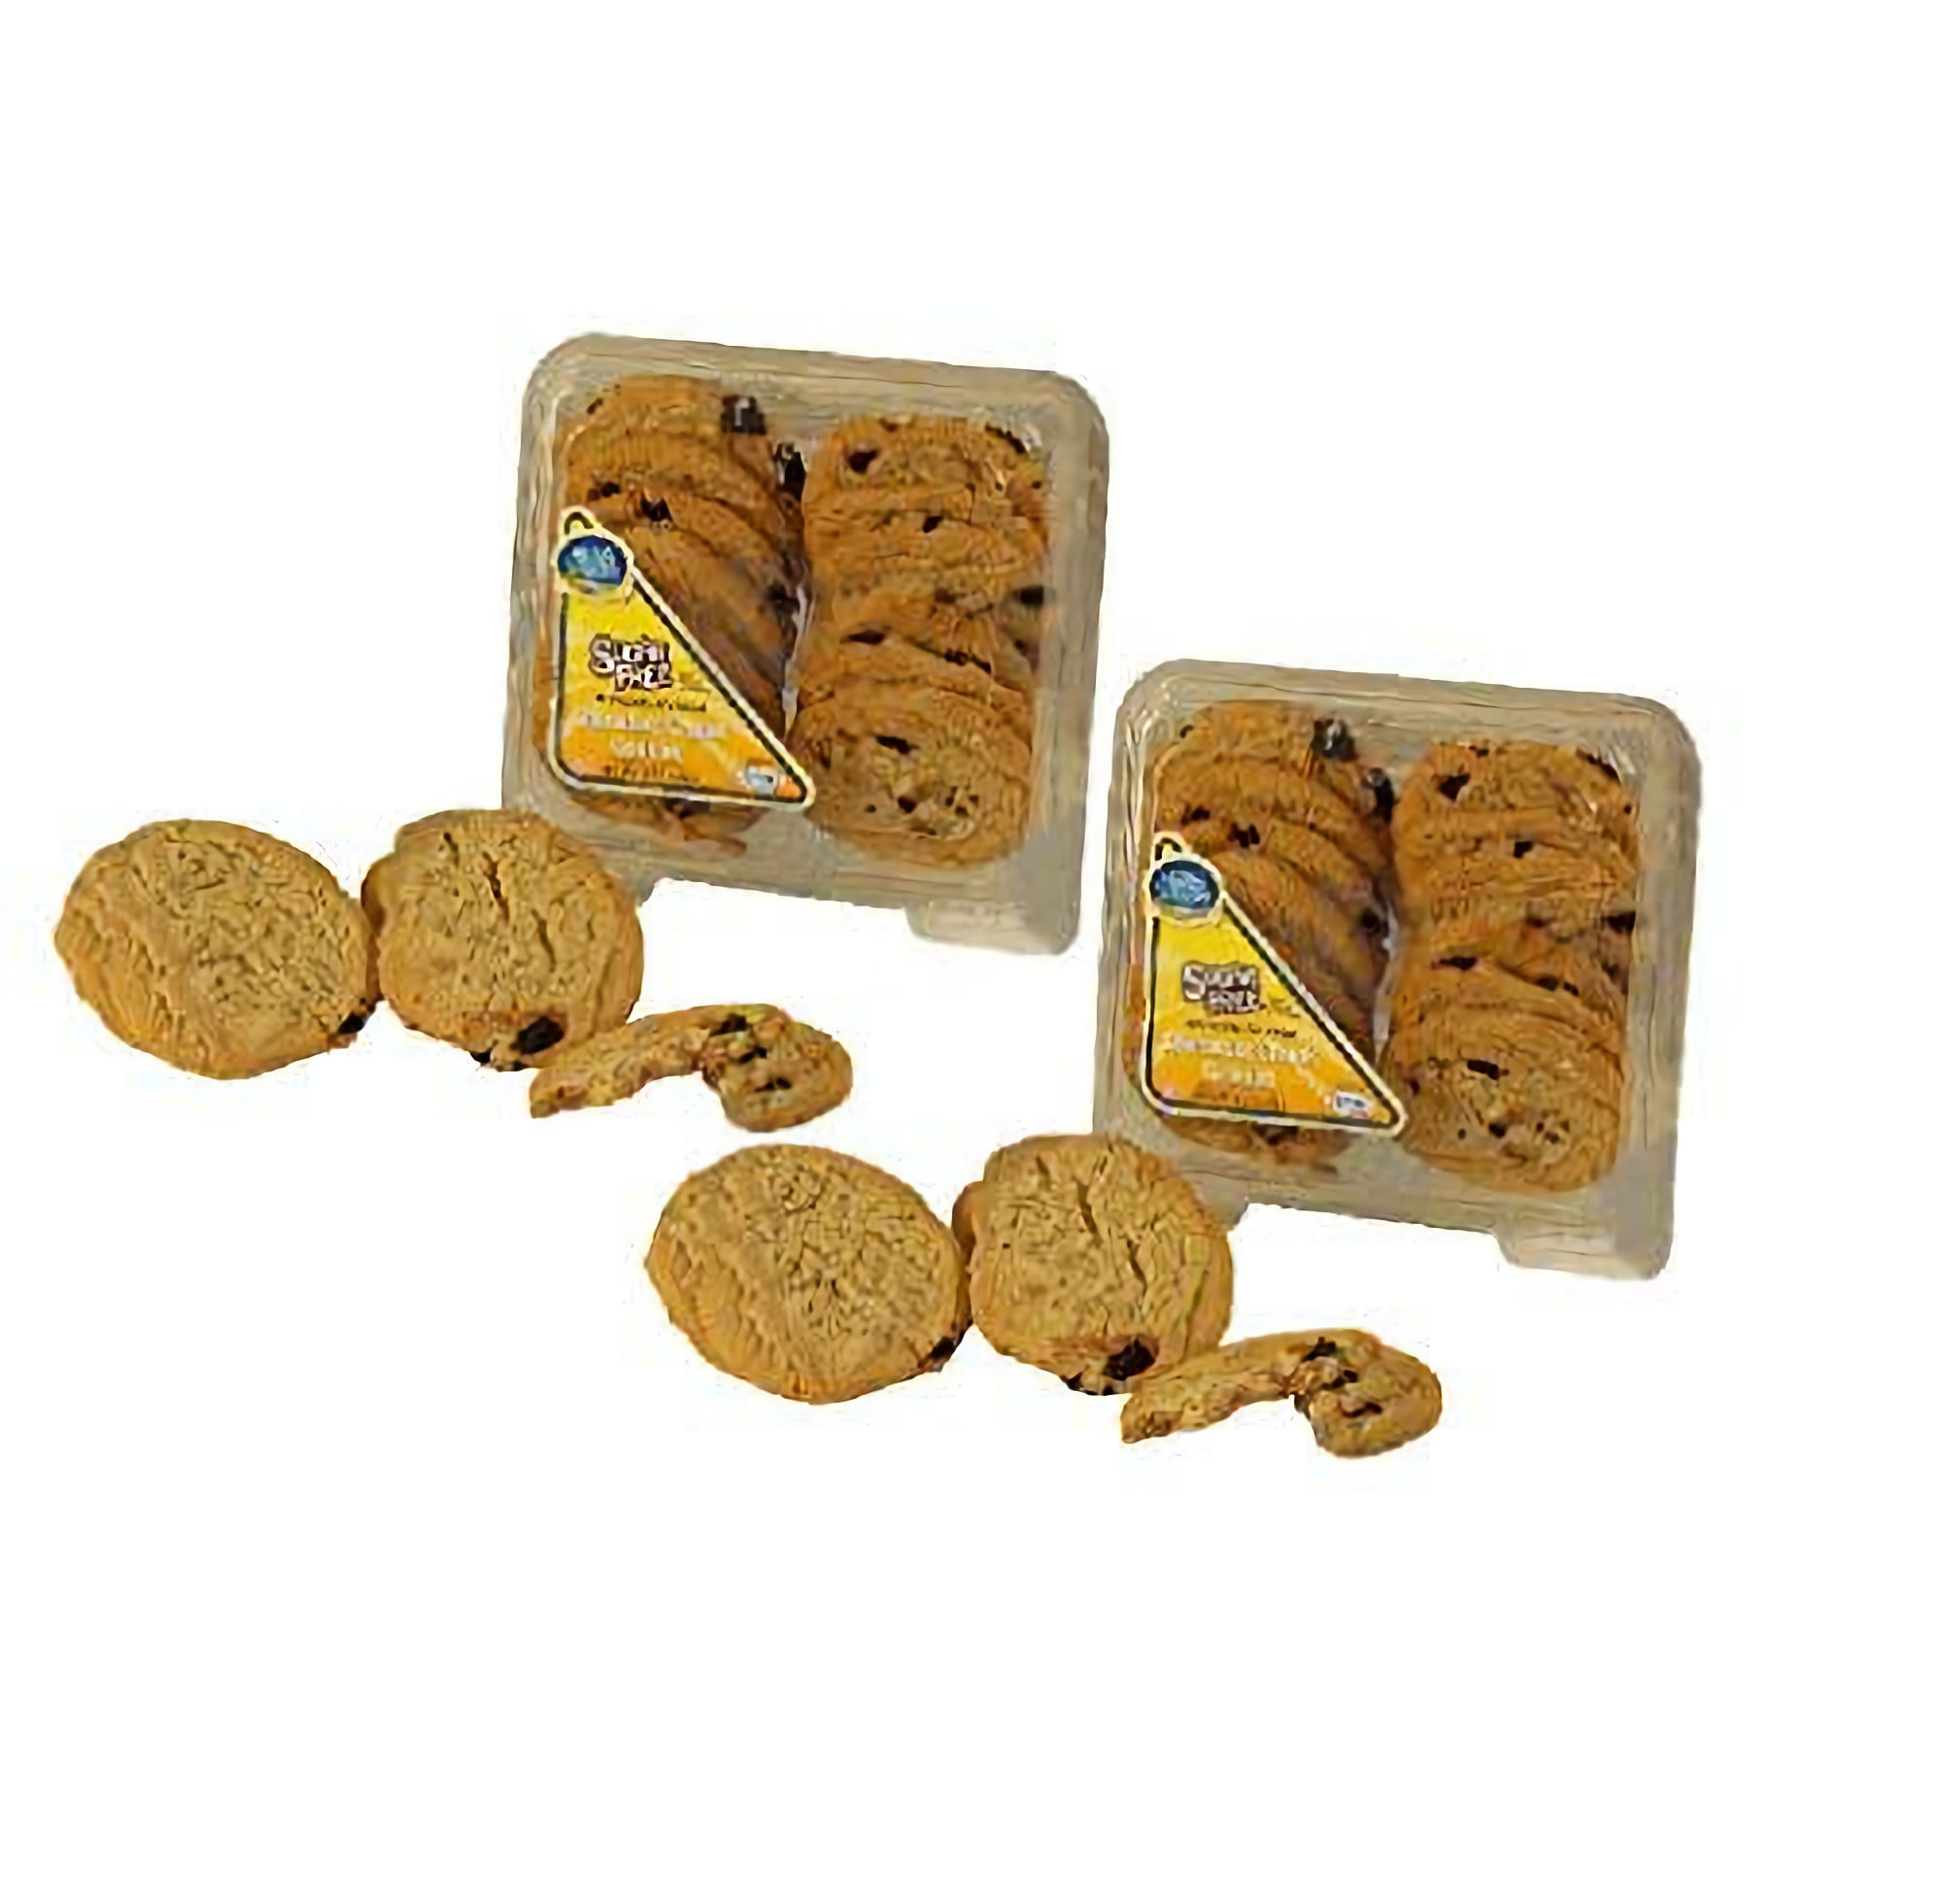 Lotus Biscoff Cookies Caramelized Biscuits Classic Flavor – Party Size,  26.4 oz 96 Cookies